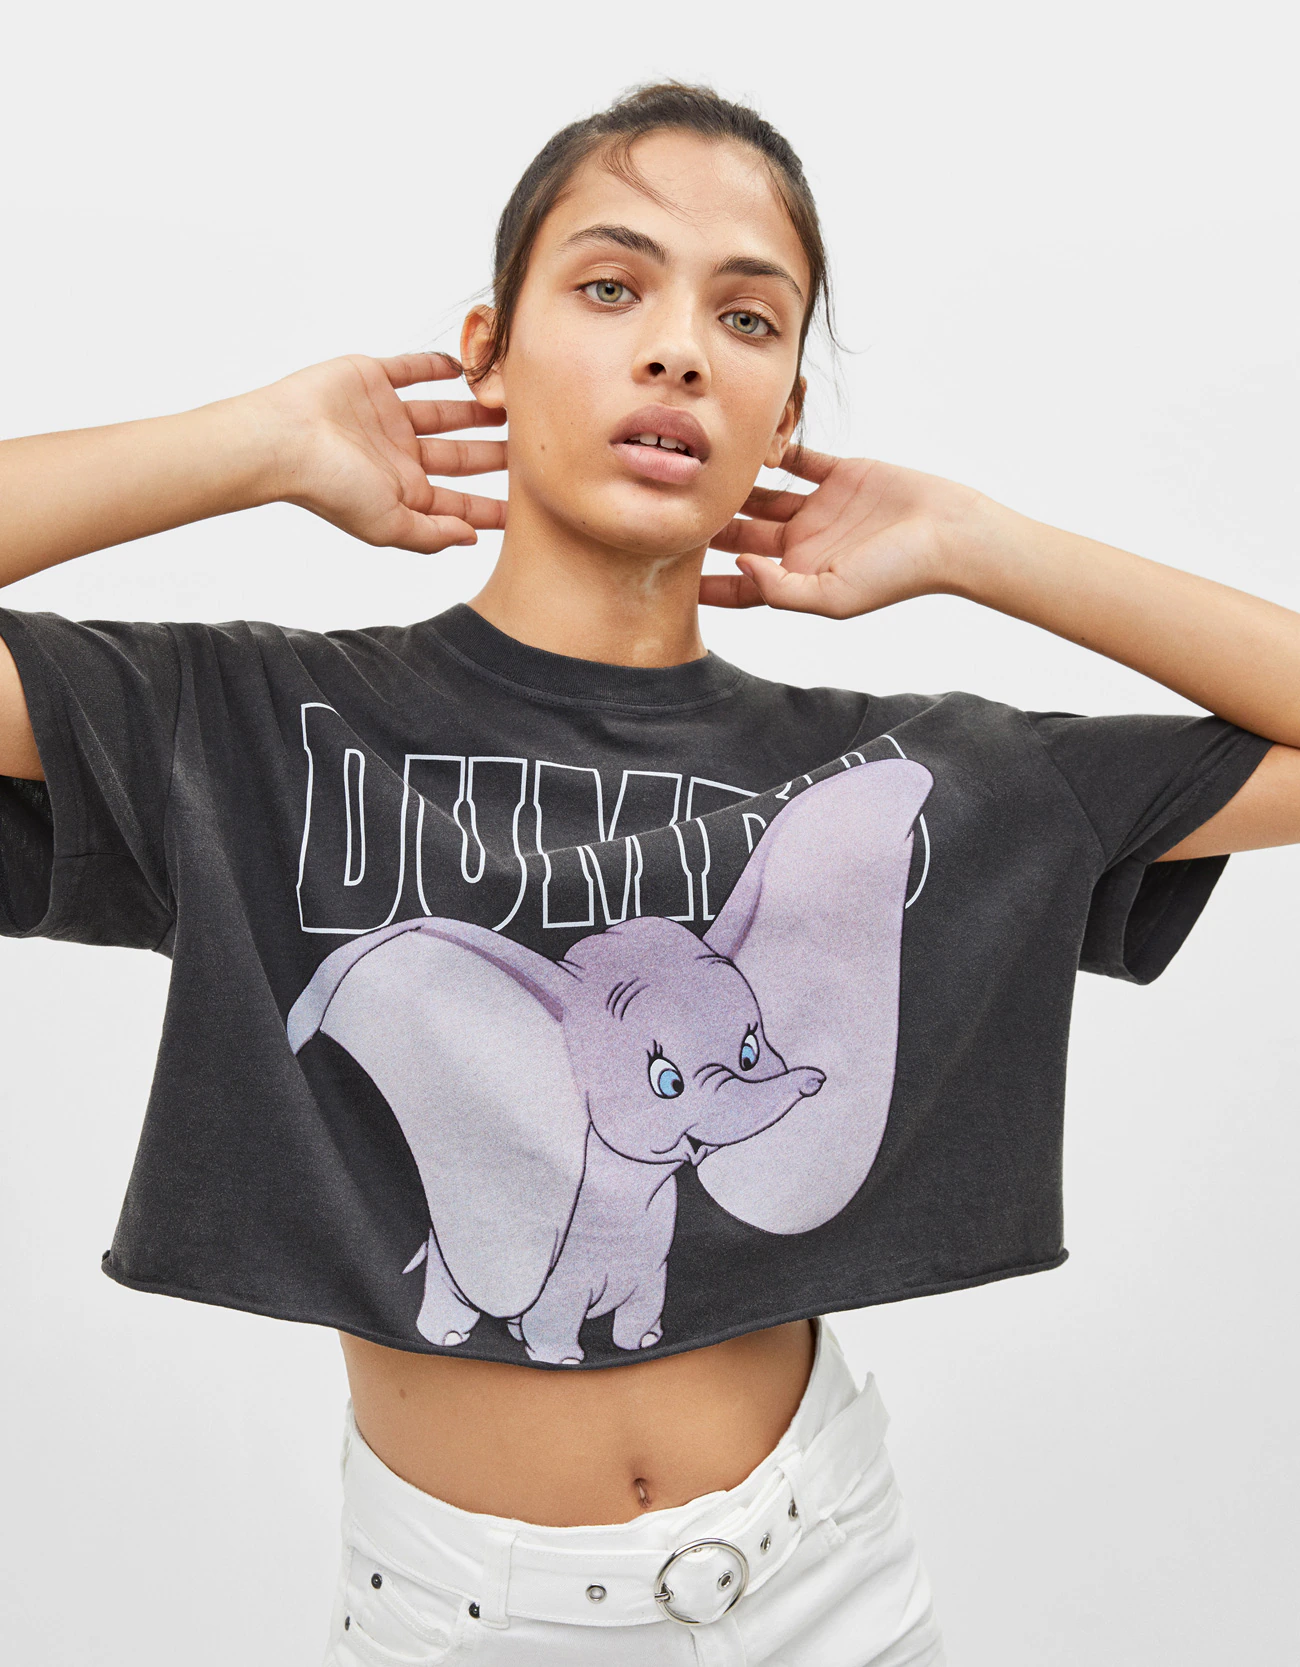 Camisetas low cost de personajes Disney: Dumbo.